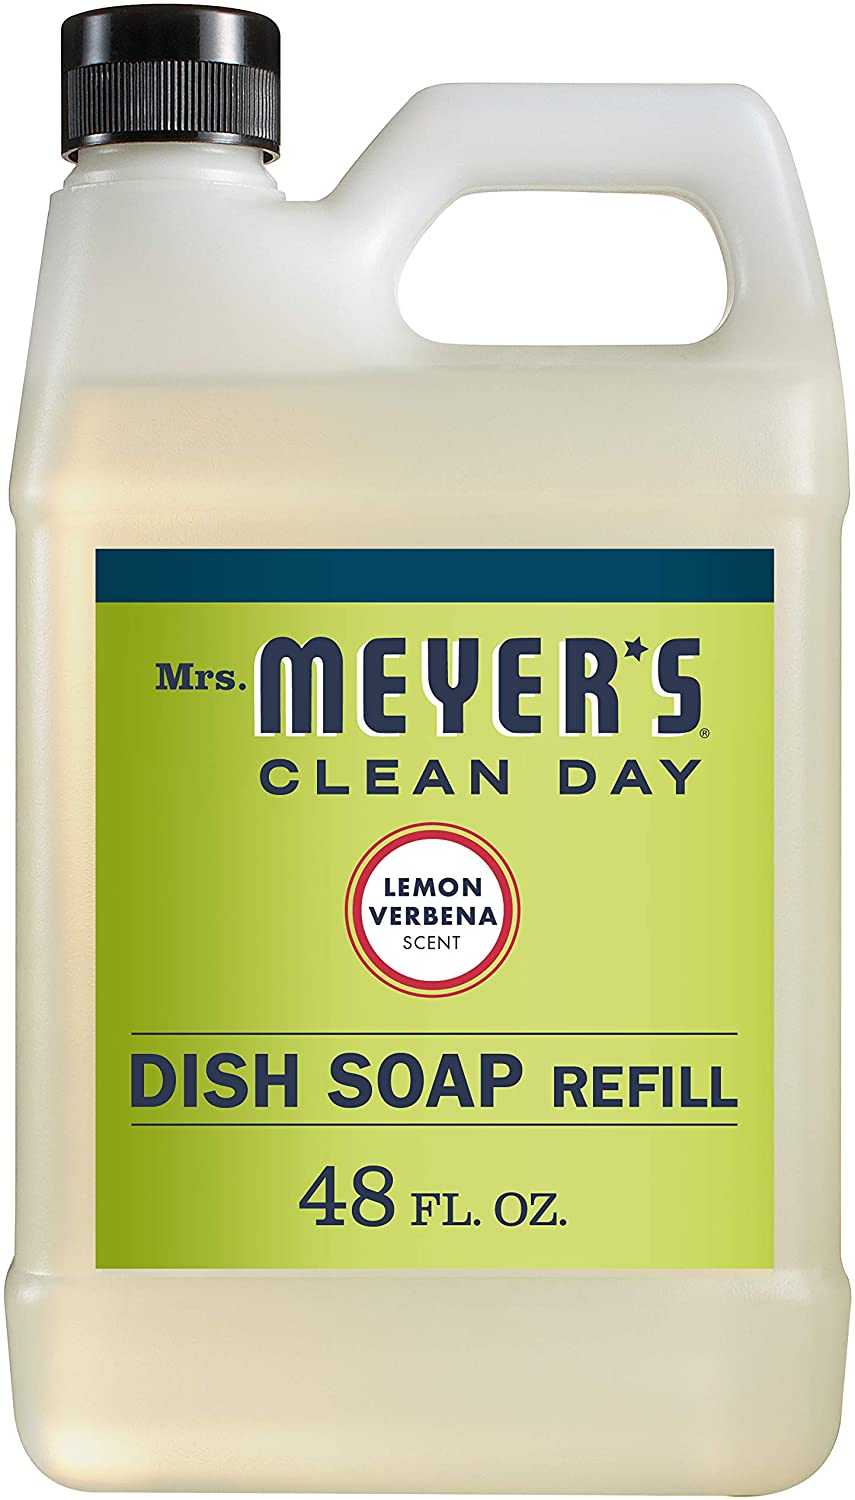 Mrs. Meyer's Clean Day Liquid Dish Soap Refill, Cruelty Free Formula, Lemon Verbena Scent, 48 oz 4-Pack